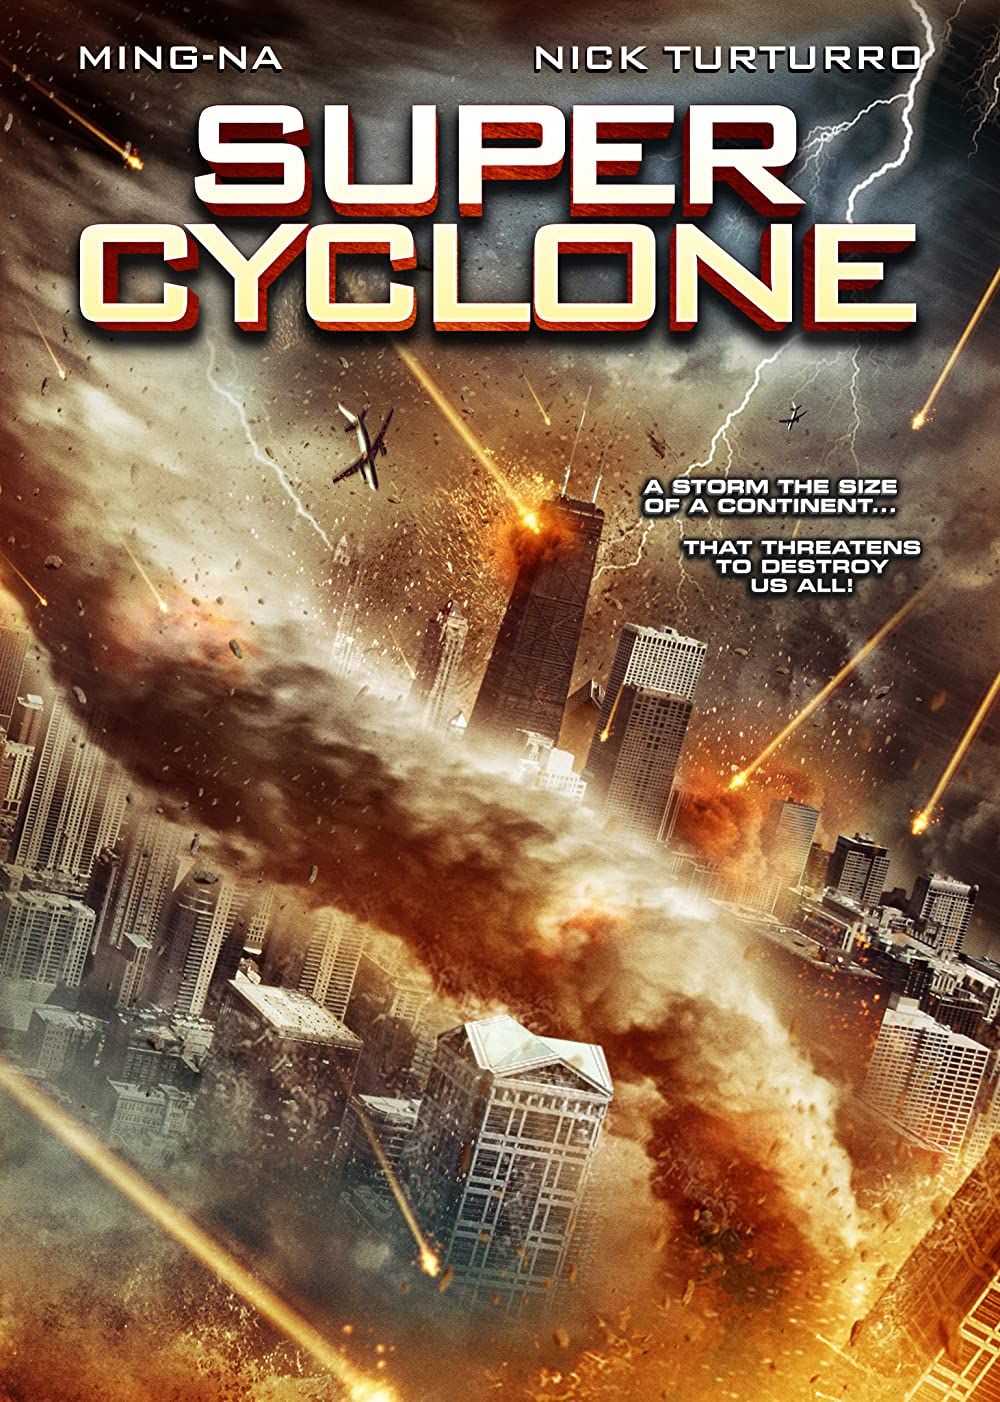 Super Cyclone (2012) Hindi Dubbed BluRay download full movie